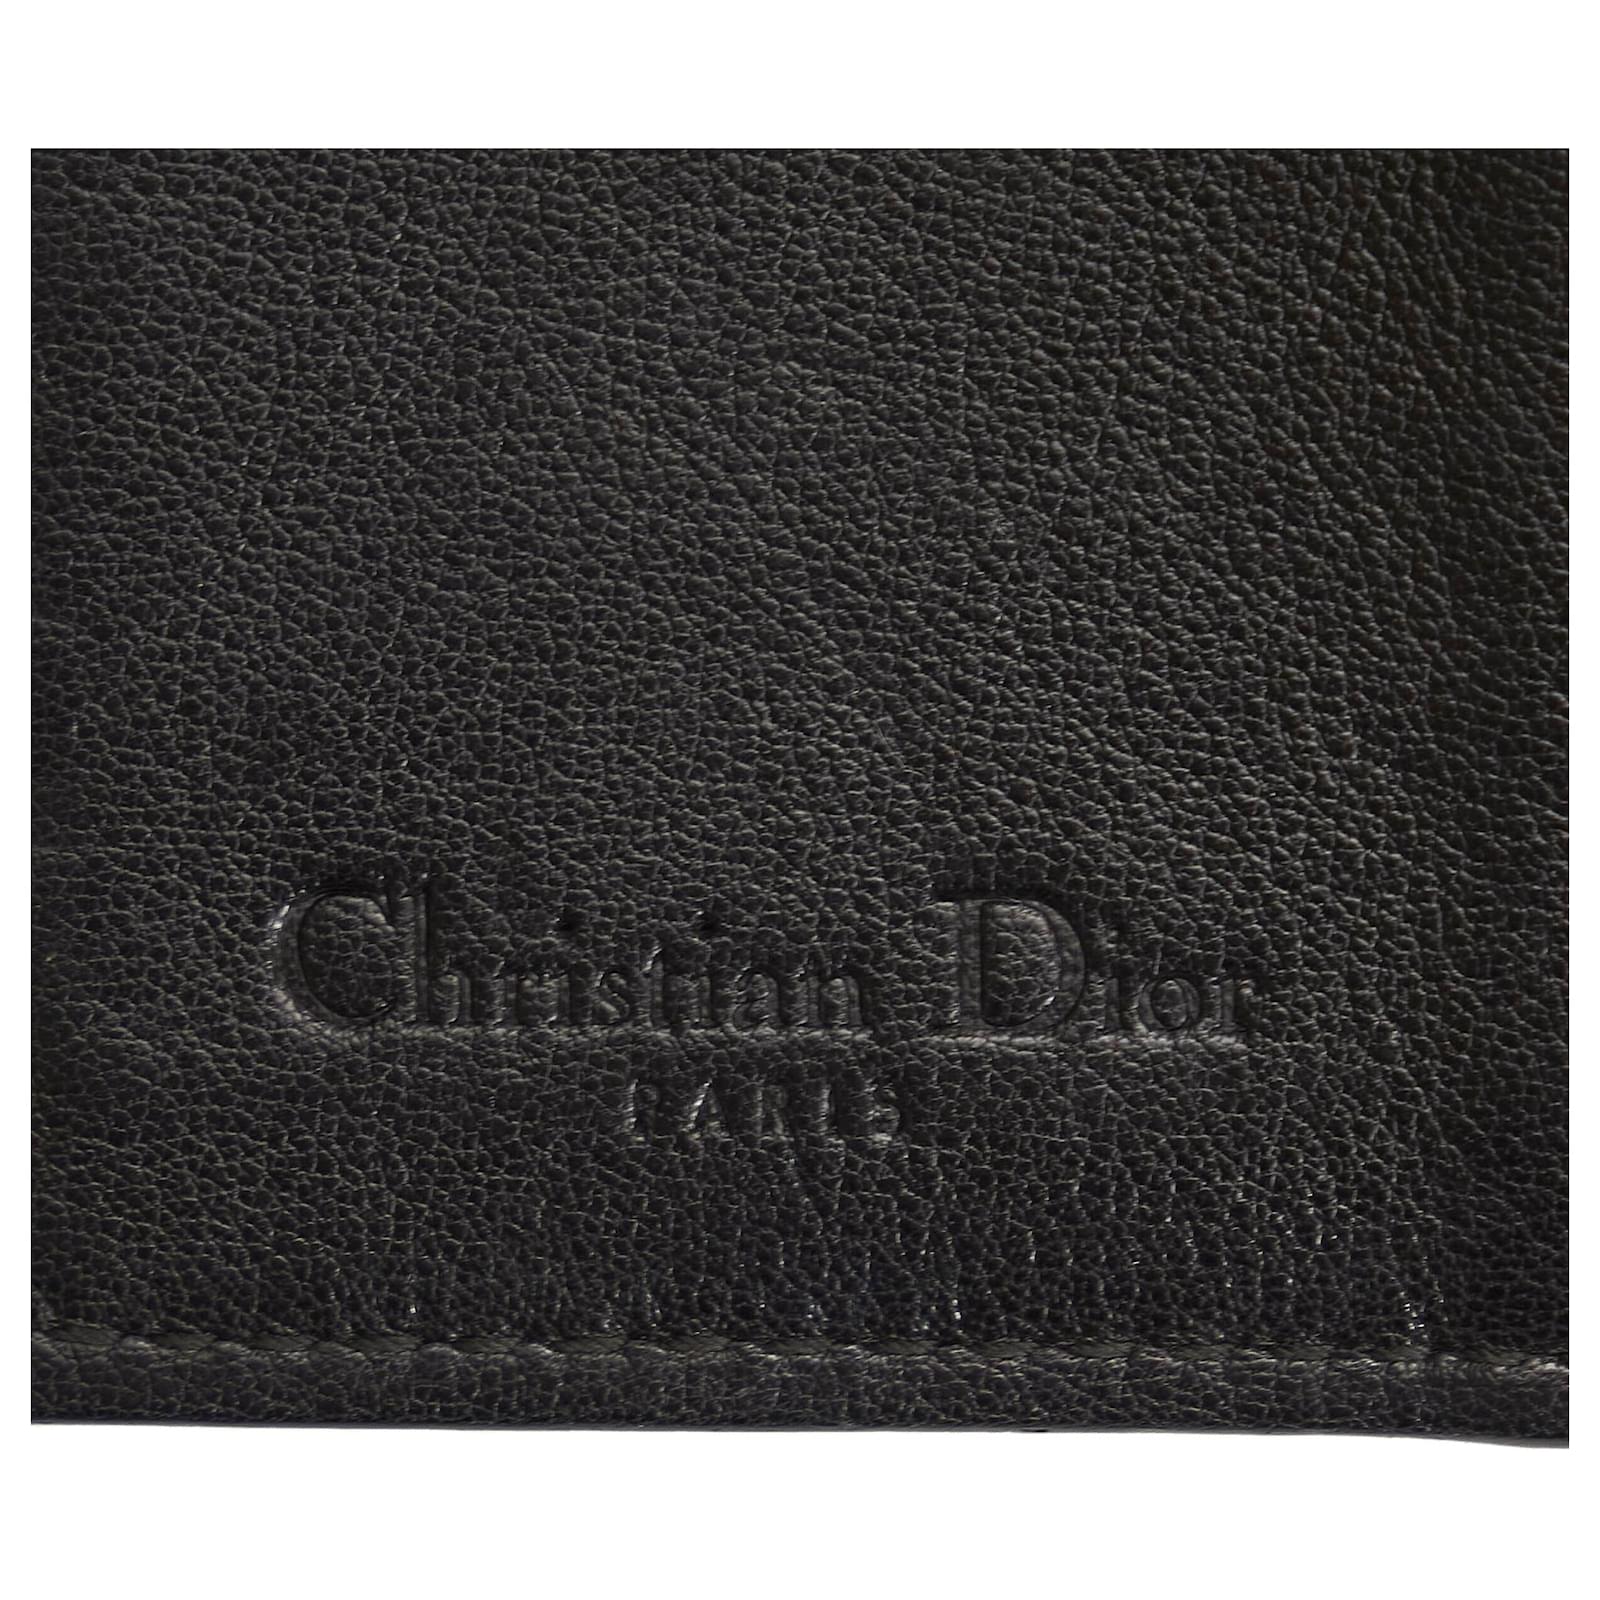 Christian Dior Key Holder